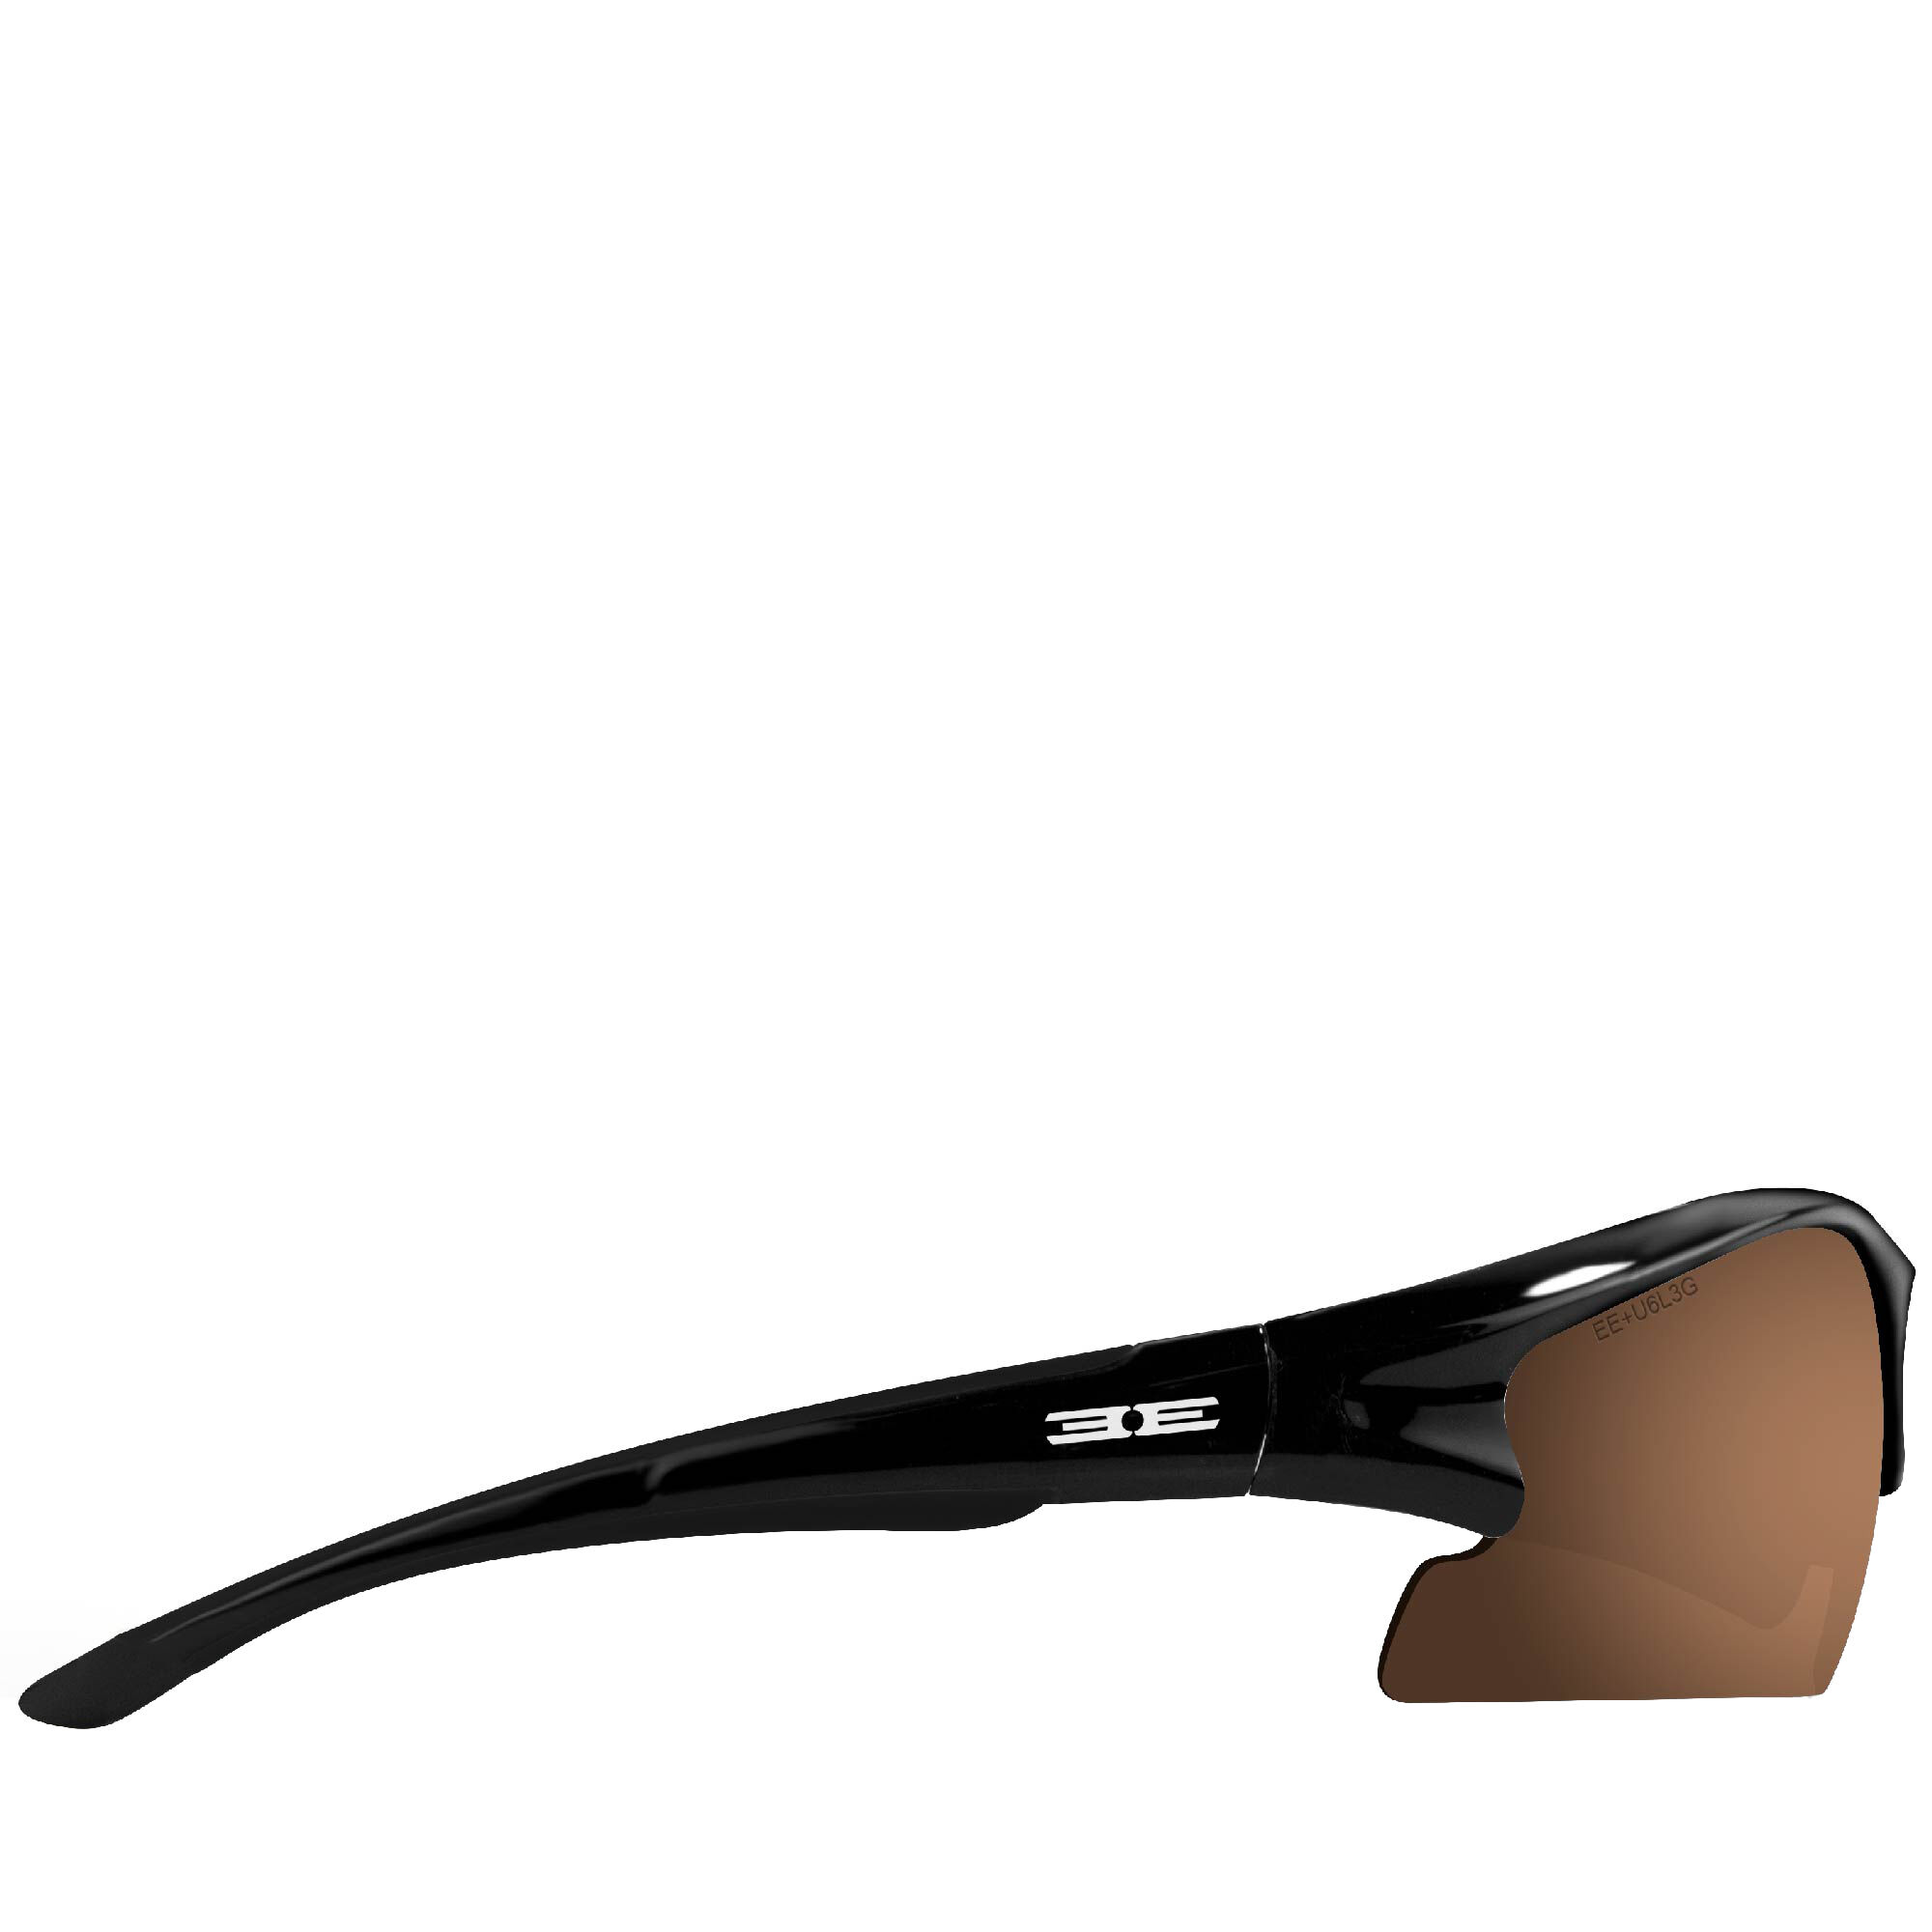 Epoch Eyewear Vet Owned Epoch 5 Black/HC Brown Polarized Sport Fishing Glasses 